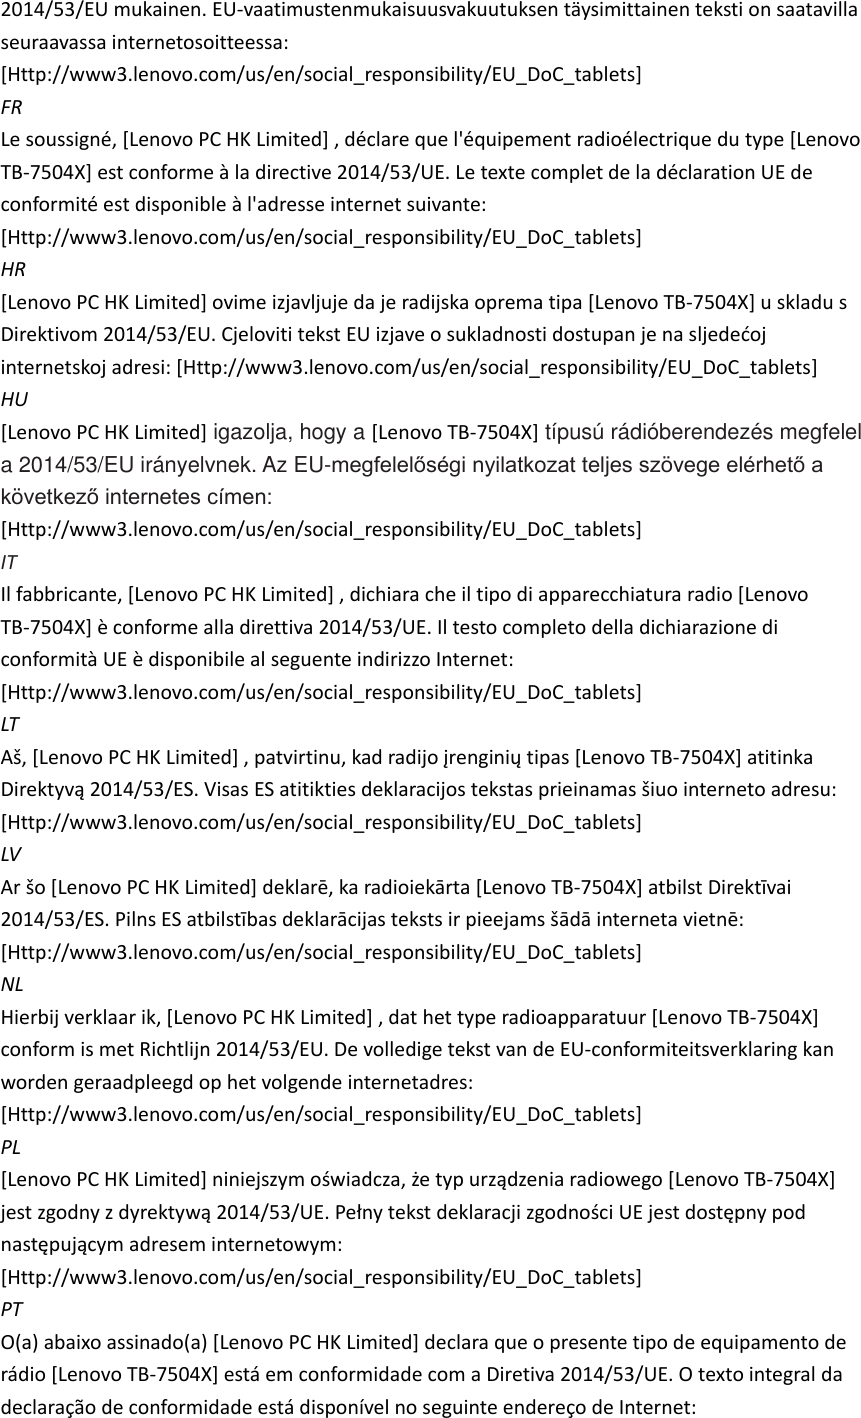 2014/53/EU mukainen. EU-vaatimustenmukaisuusvakuutuksen täysimittainen teksti on saatavilla seuraavassa internetosoitteessa: [Http://www3.lenovo.com/us/en/social_responsibility/EU_DoC_tablets]   FR Le soussigné, [Lenovo PC HK Limited] , déclare que l&apos;équipement radioélectrique du type [Lenovo TB-7504X] est conforme à la directive 2014/53/UE. Le texte complet de la déclaration UE de conformité est disponible à l&apos;adresse internet suivante: [Http://www3.lenovo.com/us/en/social_responsibility/EU_DoC_tablets]   HR [Lenovo PC HK Limited] ovime izjavljuje da je radijska oprema tipa [Lenovo TB-7504X] u skladu s Direktivom 2014/53/EU. internetskoj adresi: [Http://www3.lenovo.com/us/en/social_responsibility/EU_DoC_tablets]   HU [Lenovo PC HK Limited] igazolja, hogy a [Lenovo TB-7504X] típusú rádióberendezés megfelel a 2014/53/EU irányelvnek. Az EU-megfelelőségi nyilatkozat teljes szövege elérhető a következő internetes címen: [Http://www3.lenovo.com/us/en/social_responsibility/EU_DoC_tablets]   IT Il fabbricante, [Lenovo PC HK Limited] , dichiara che il tipo di apparecchiatura radio [Lenovo TB-7504X] è conforme alla direttiva 2014/53/UE. Il testo completo della dichiarazione di conformità UE è disponibile al seguente indirizzo Internet: [Http://www3.lenovo.com/us/en/social_responsibility/EU_DoC_tablets]   LT Lenovo PC HK LimitedLenovo TB-7504X] atitinka [Http://www3.lenovo.com/us/en/social_responsibility/EU_DoC_tablets]   LV Lenovo PC HK LimitedLenovo TB-7504X [Http://www3.lenovo.com/us/en/social_responsibility/EU_DoC_tablets]   NL Hierbij verklaar ik, [Lenovo PC HK Limited] , dat het type radioapparatuur [Lenovo TB-7504X] conform is met Richtlijn 2014/53/EU. De volledige tekst van de EU-conformiteitsverklaring kan worden geraadpleegd op het volgende internetadres: [Http://www3.lenovo.com/us/en/social_responsibility/EU_DoC_tablets]   PL [Lenovo PC HK LimitedLenovo TB-7504X]  [Http://www3.lenovo.com/us/en/social_responsibility/EU_DoC_tablets]   PT O(a) abaixo assinado(a) [Lenovo PC HK Limited] declara que o presente tipo de equipamento de rádio [Lenovo TB-7504X] está em conformidade com a Diretiva 2014/53/UE. O texto integral da declaração de conformidade está disponível no seguinte endereço de Internet: 